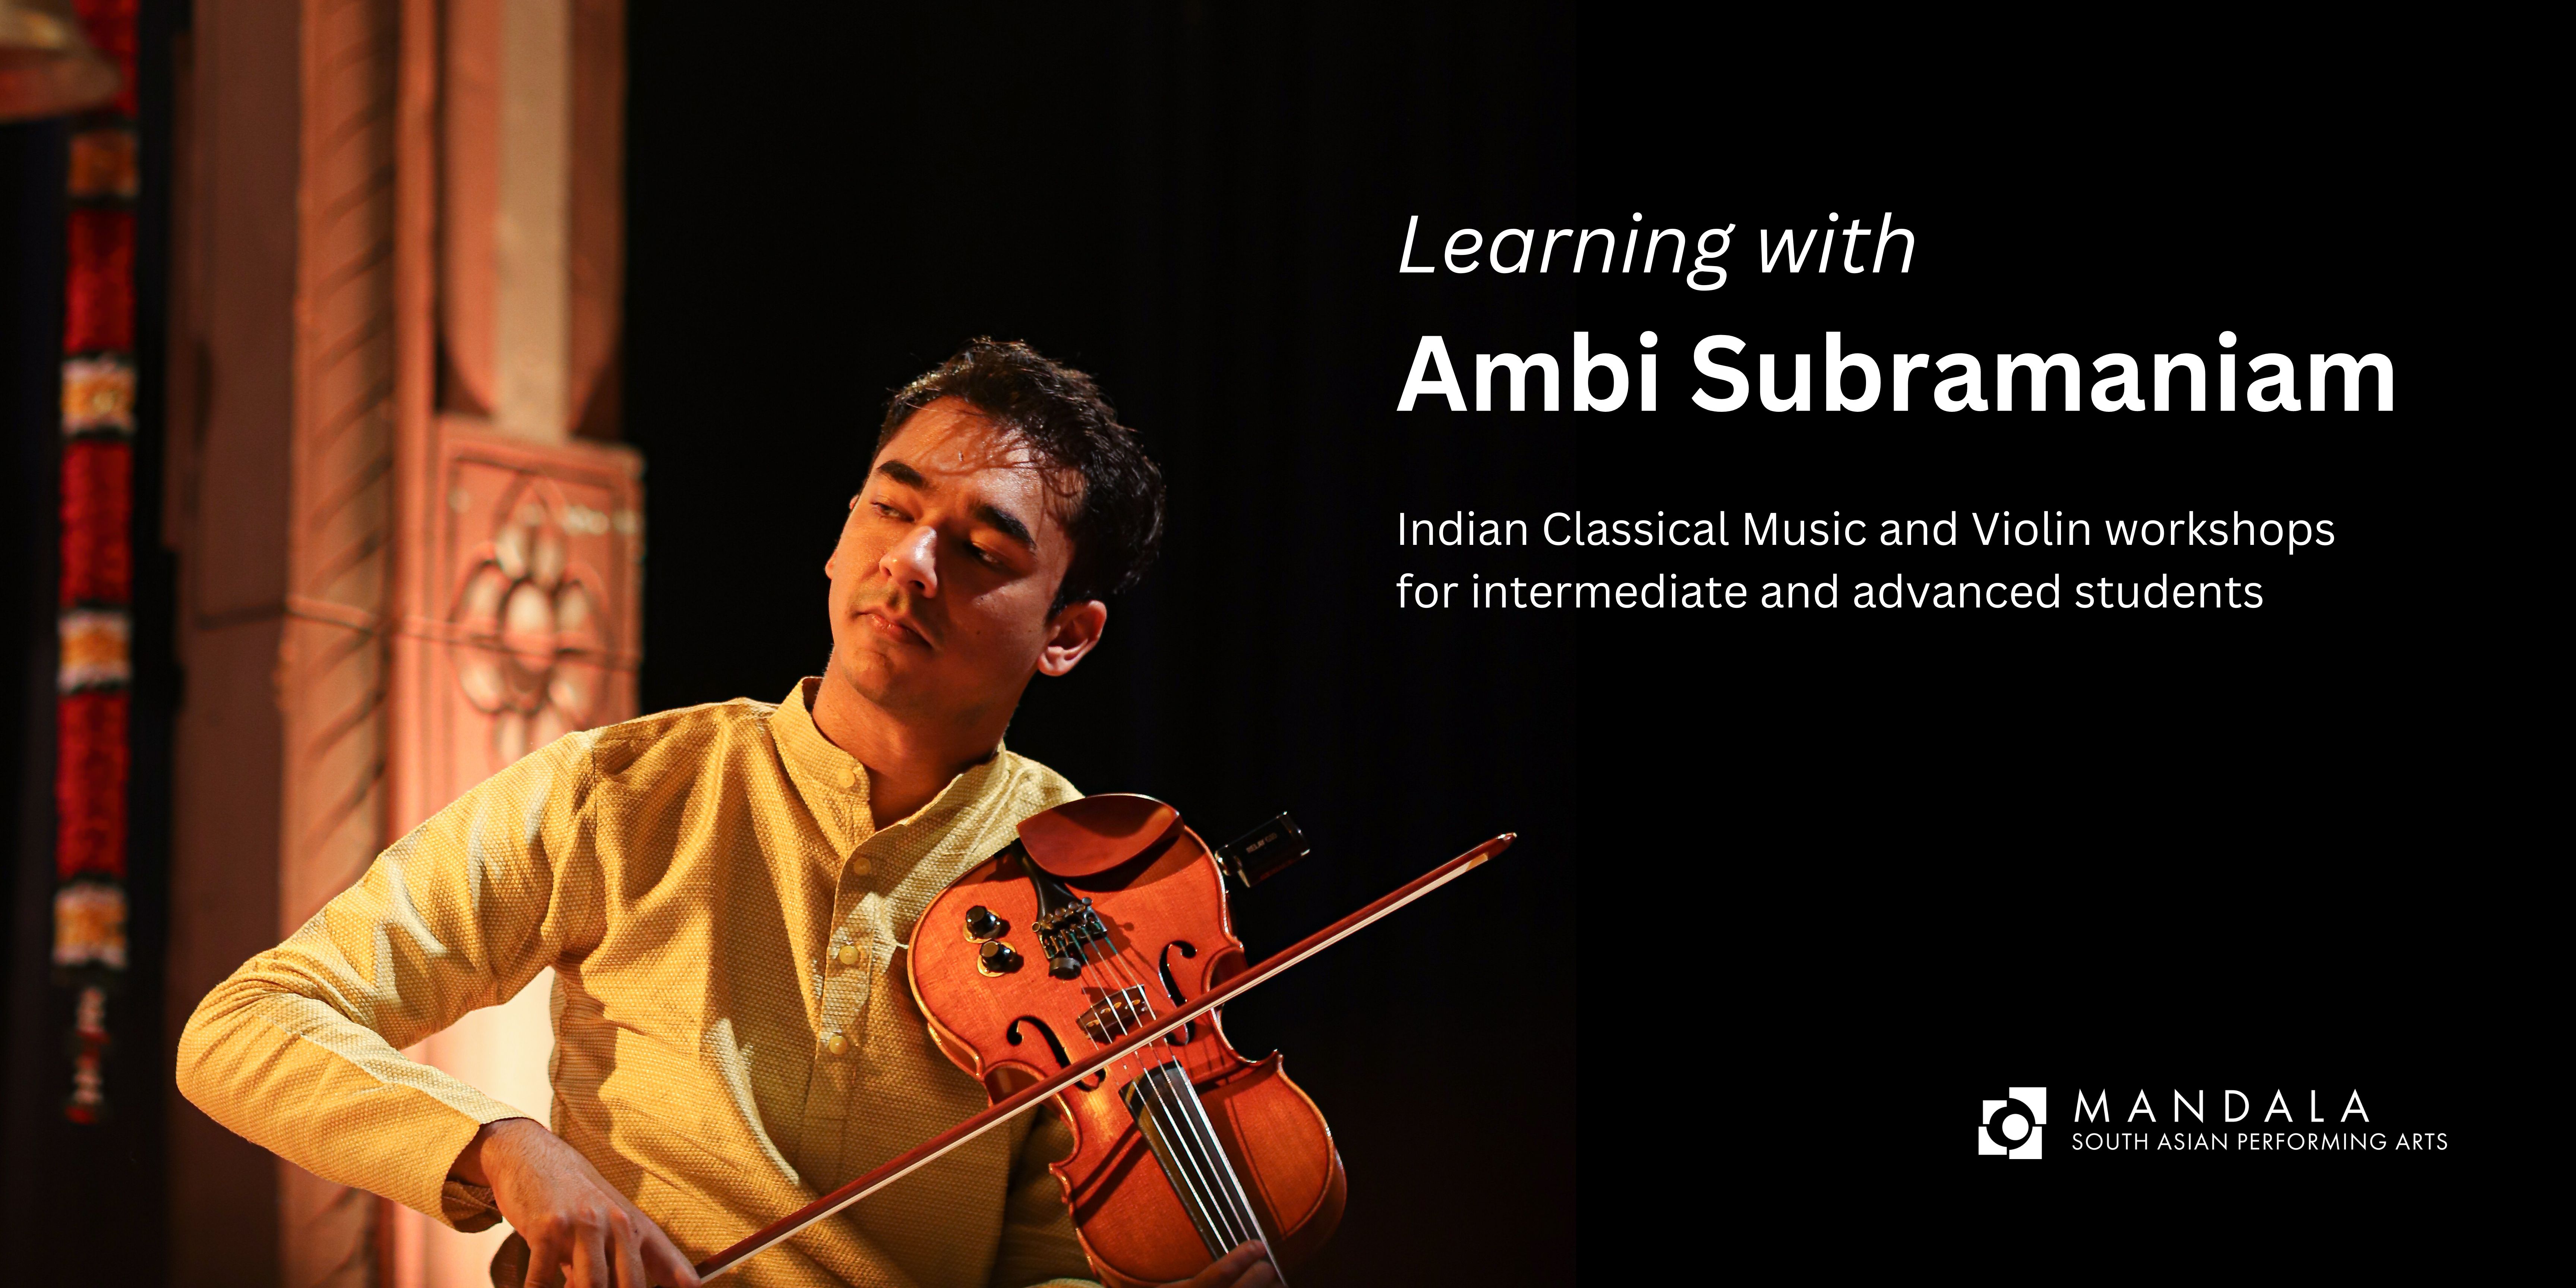 Tuesday Workshop with Ambi Subramaniam